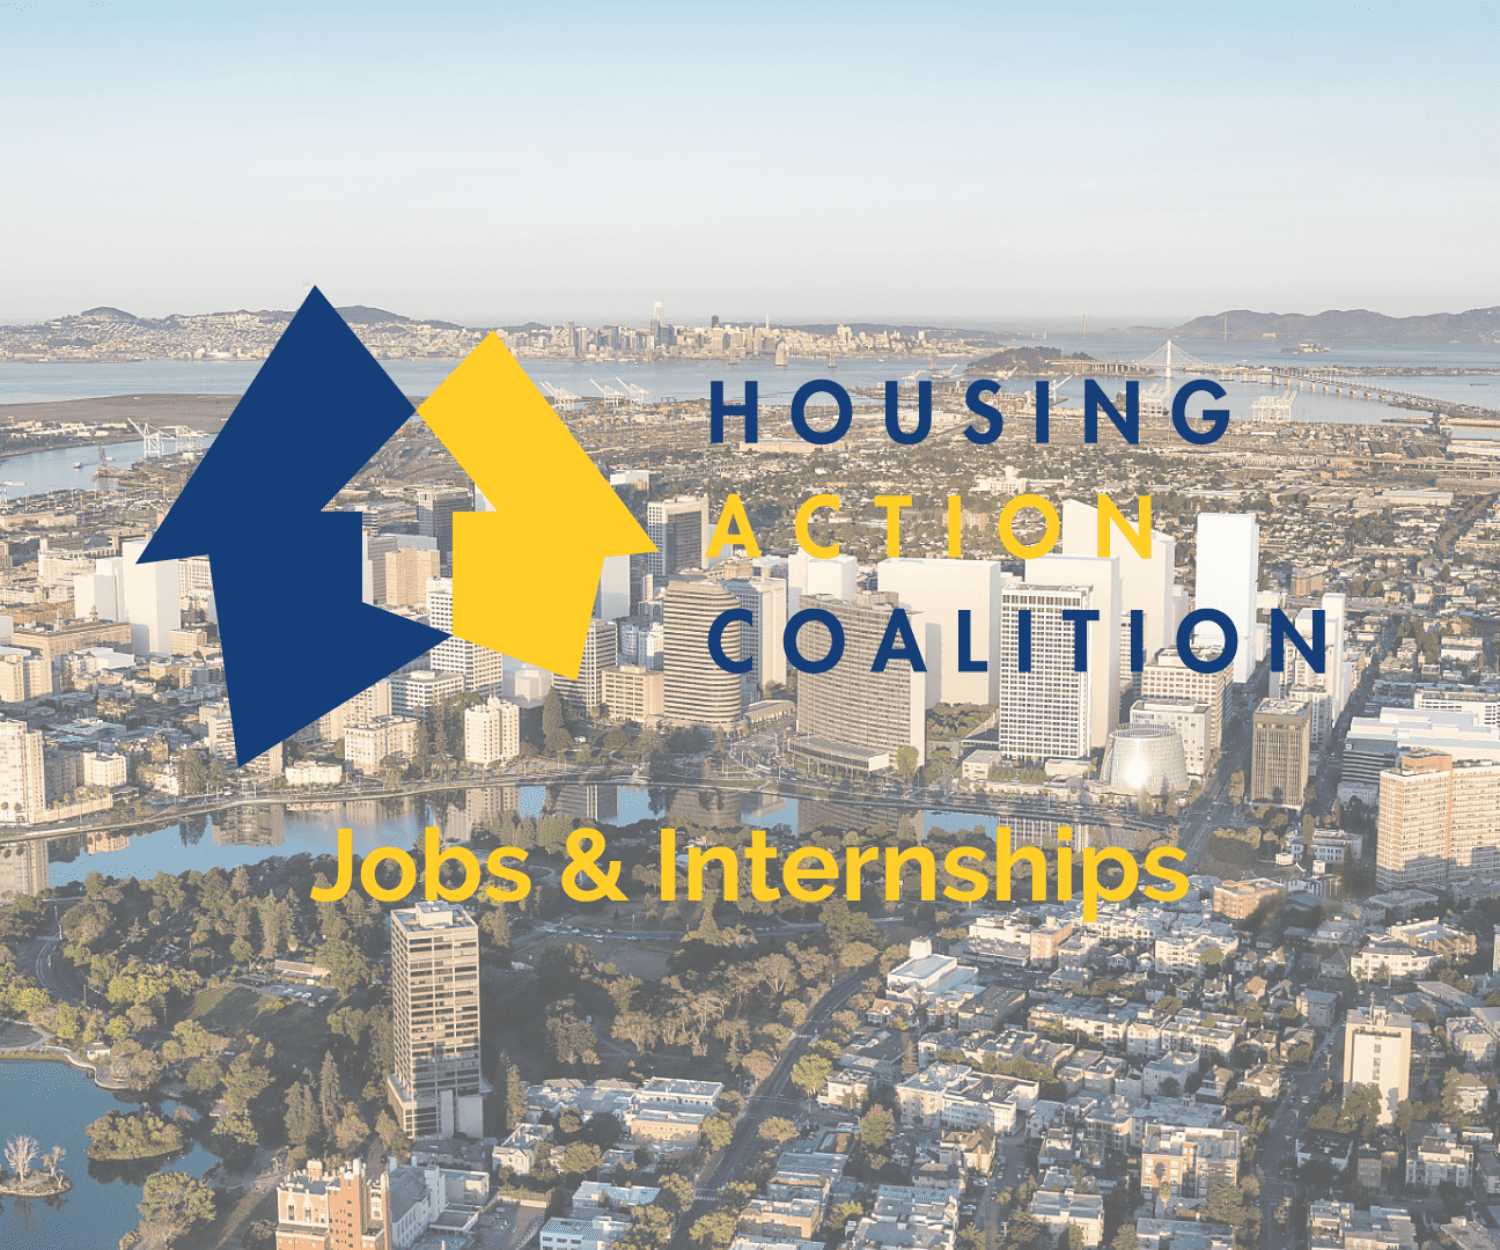 Jobs & Internships Archives Housing Action Coalition